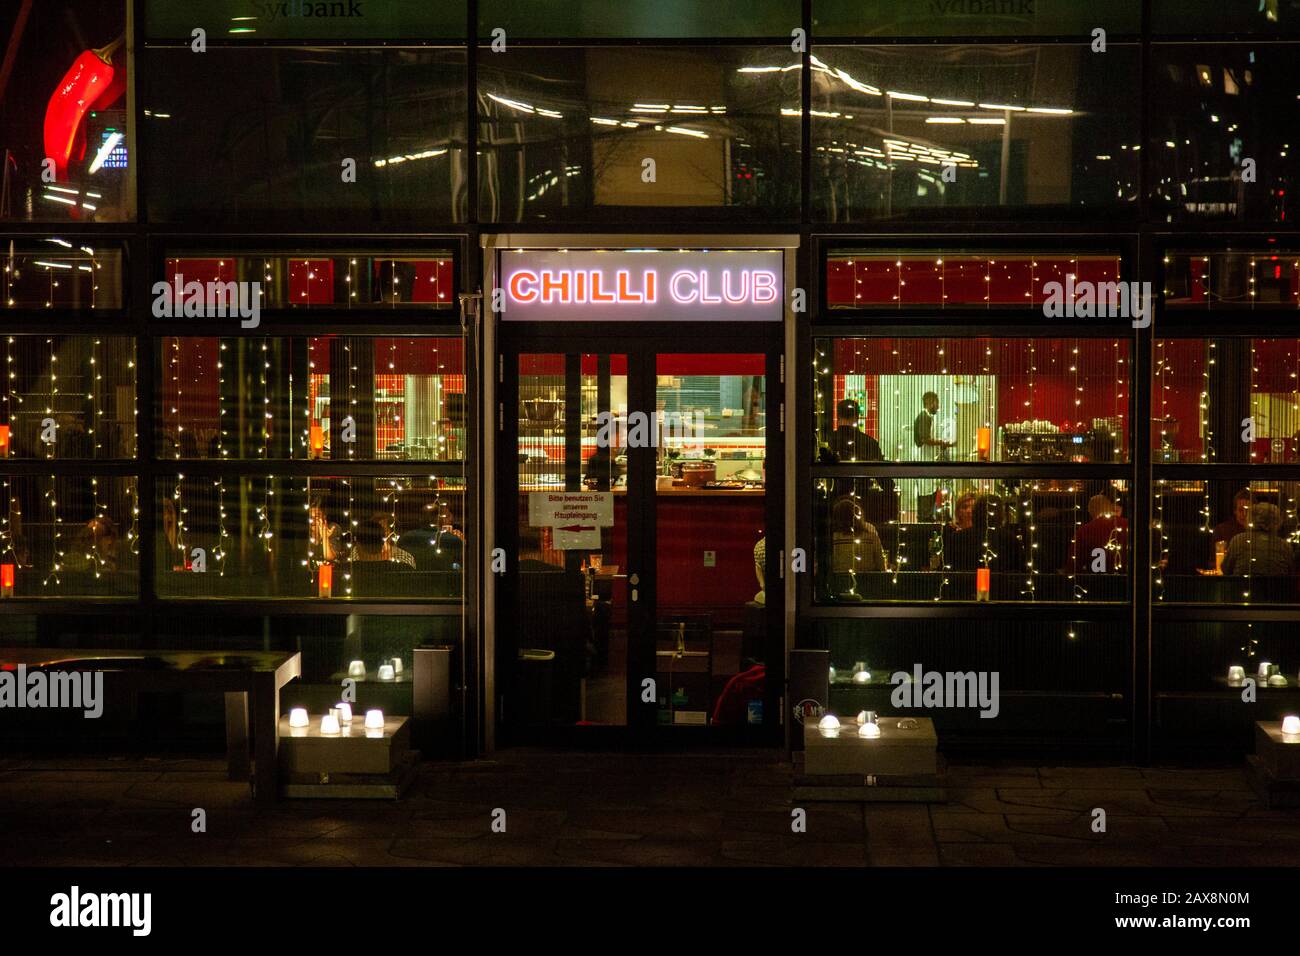 Chilli Club in HafenCity - Hamburg, Germany Stock Photo - Alamy